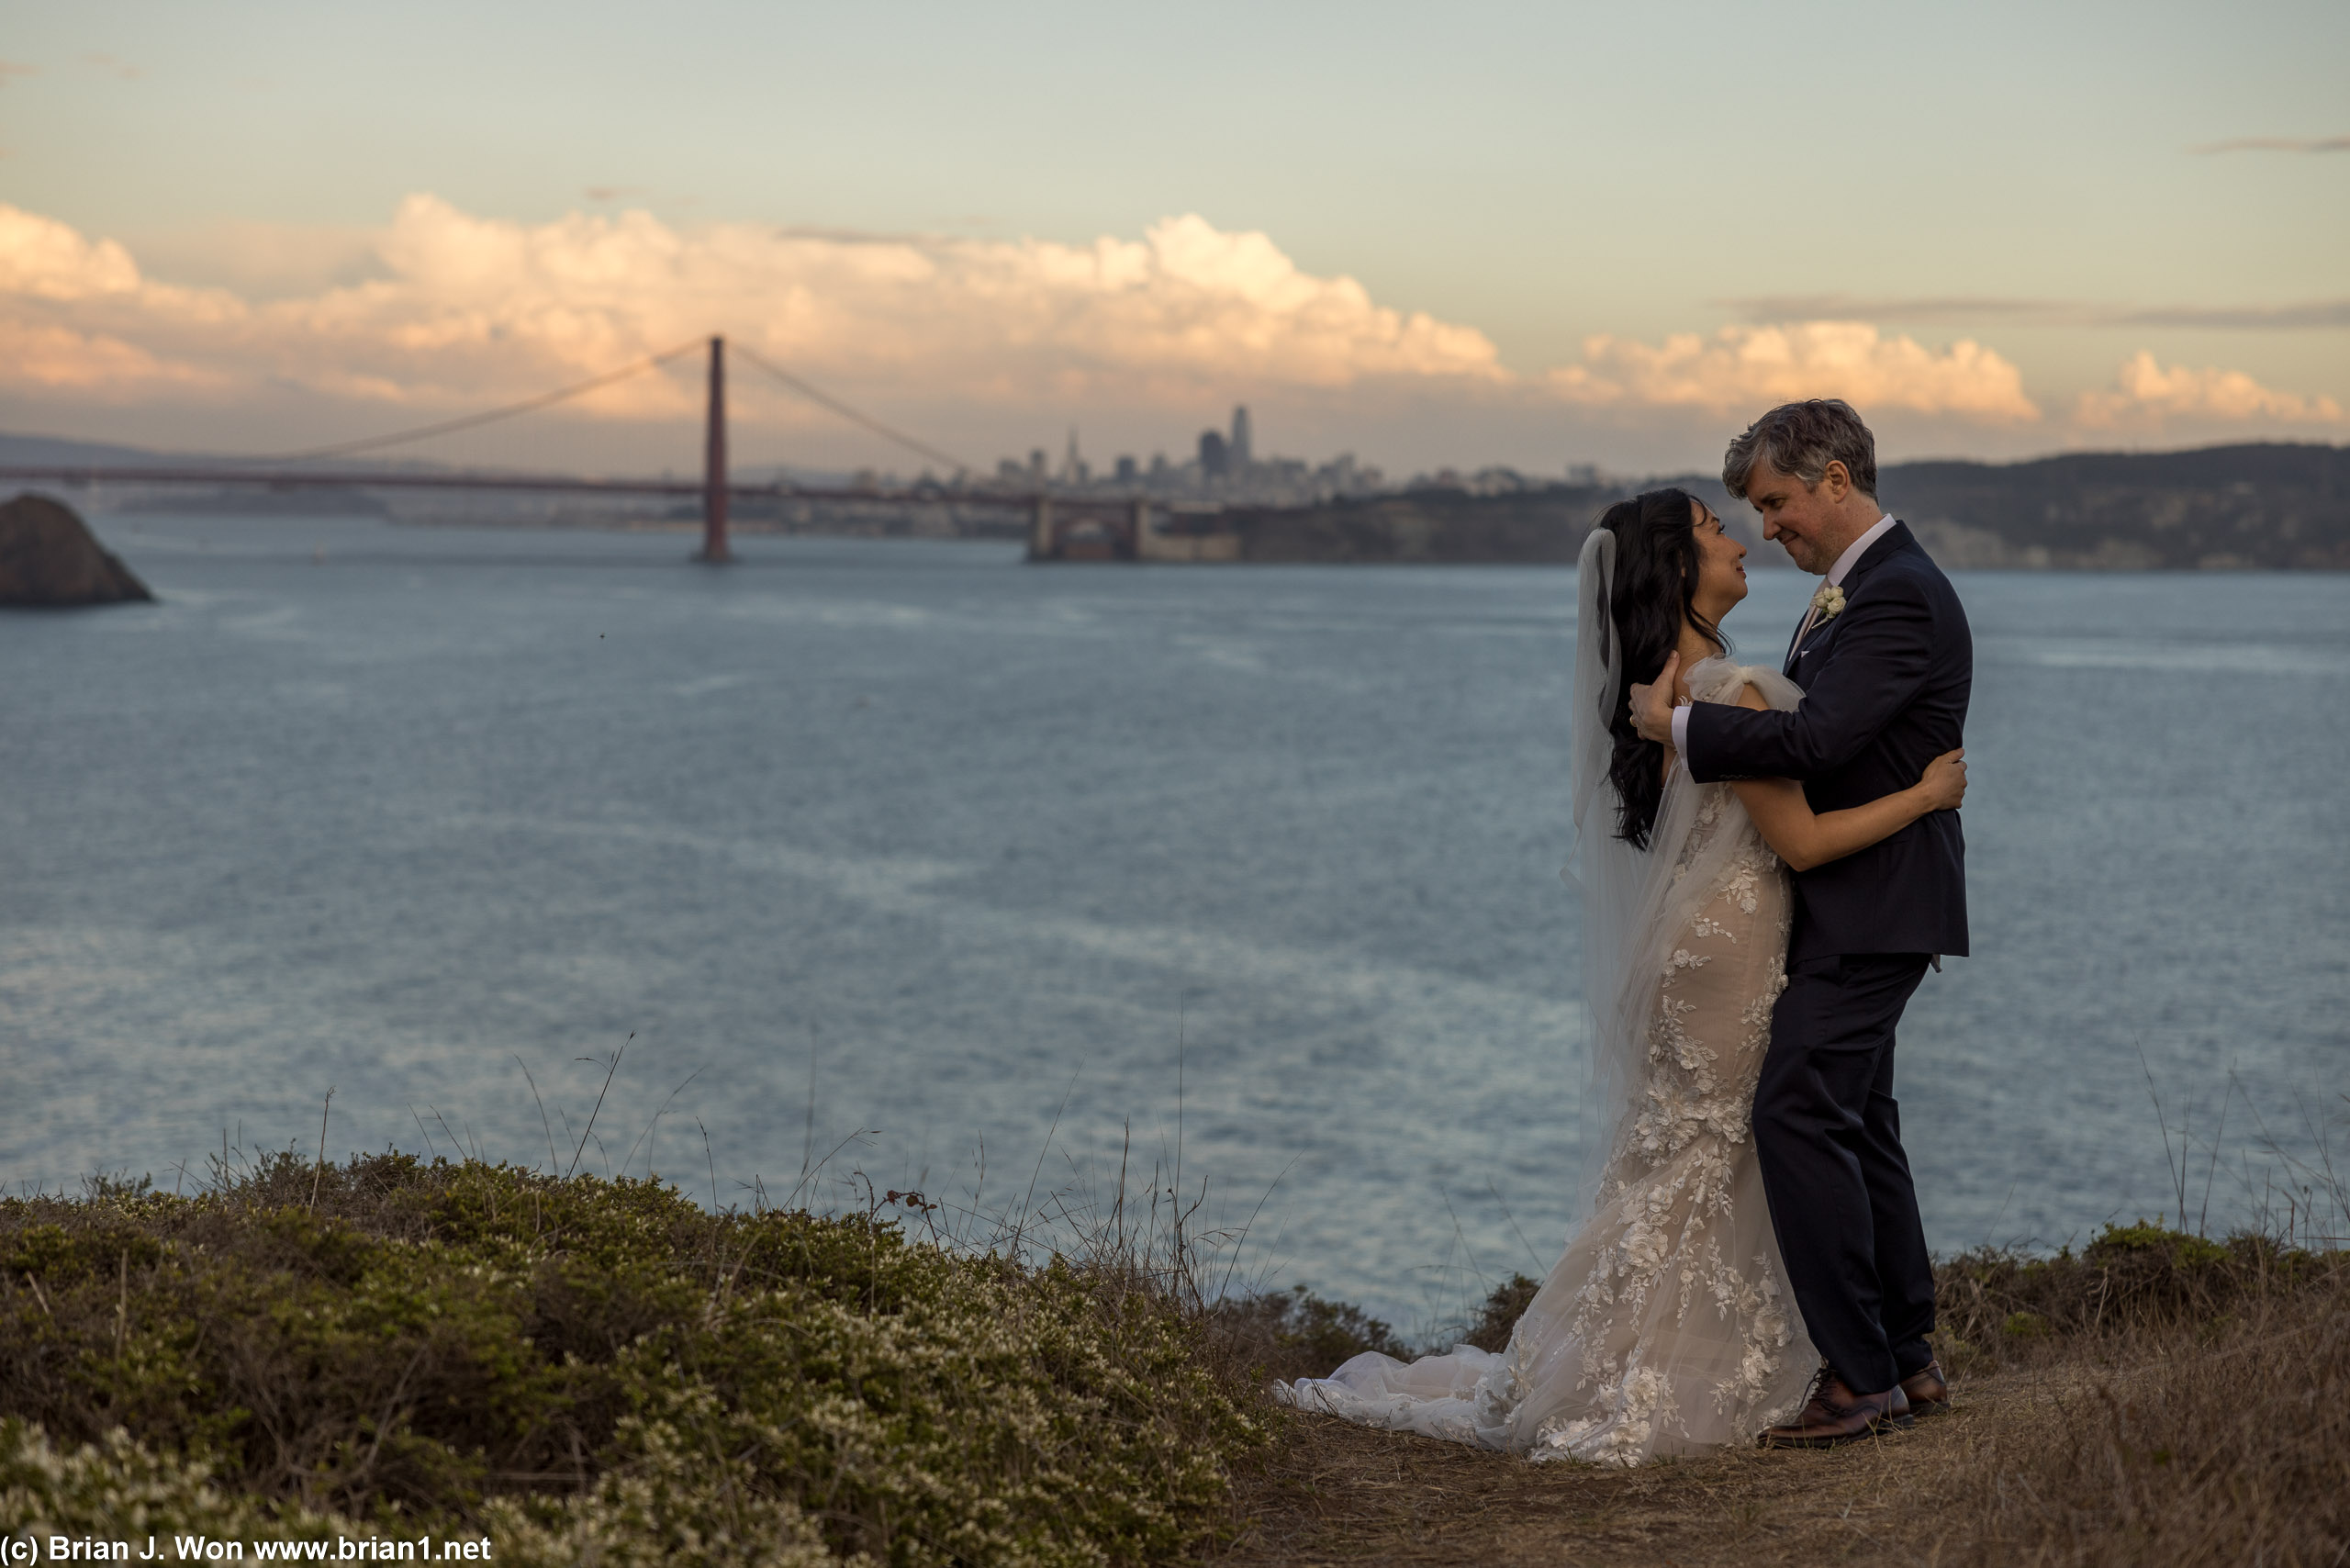 Marin Headlands and the Golden Gate Bridge at sunset.